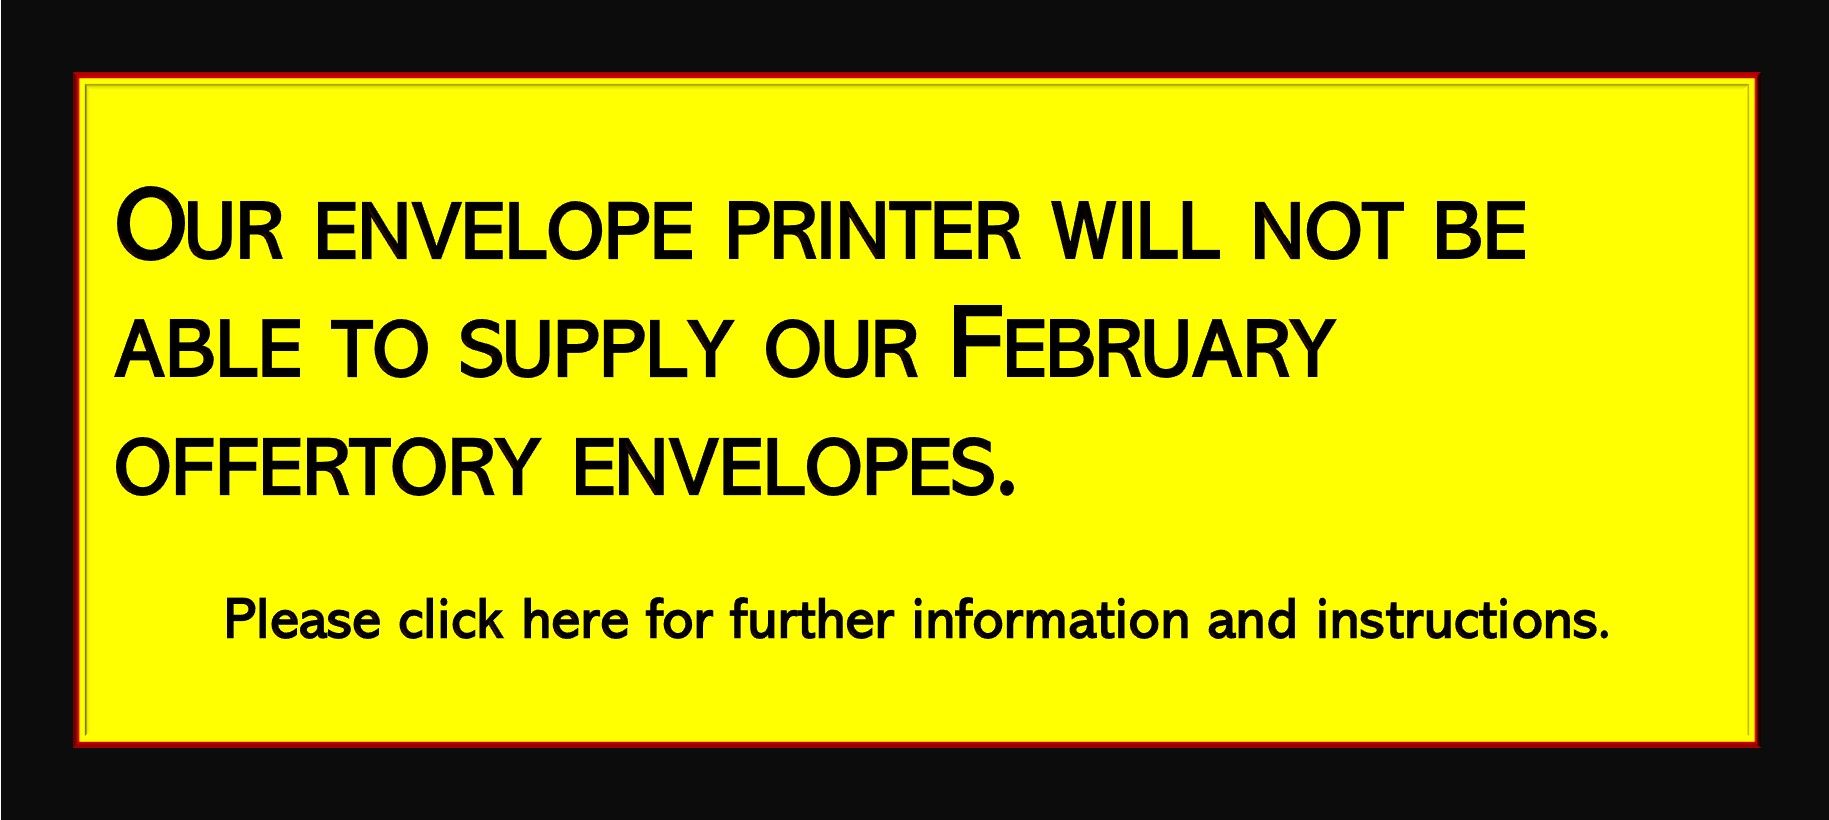 February Offertory Envelopes not supplied